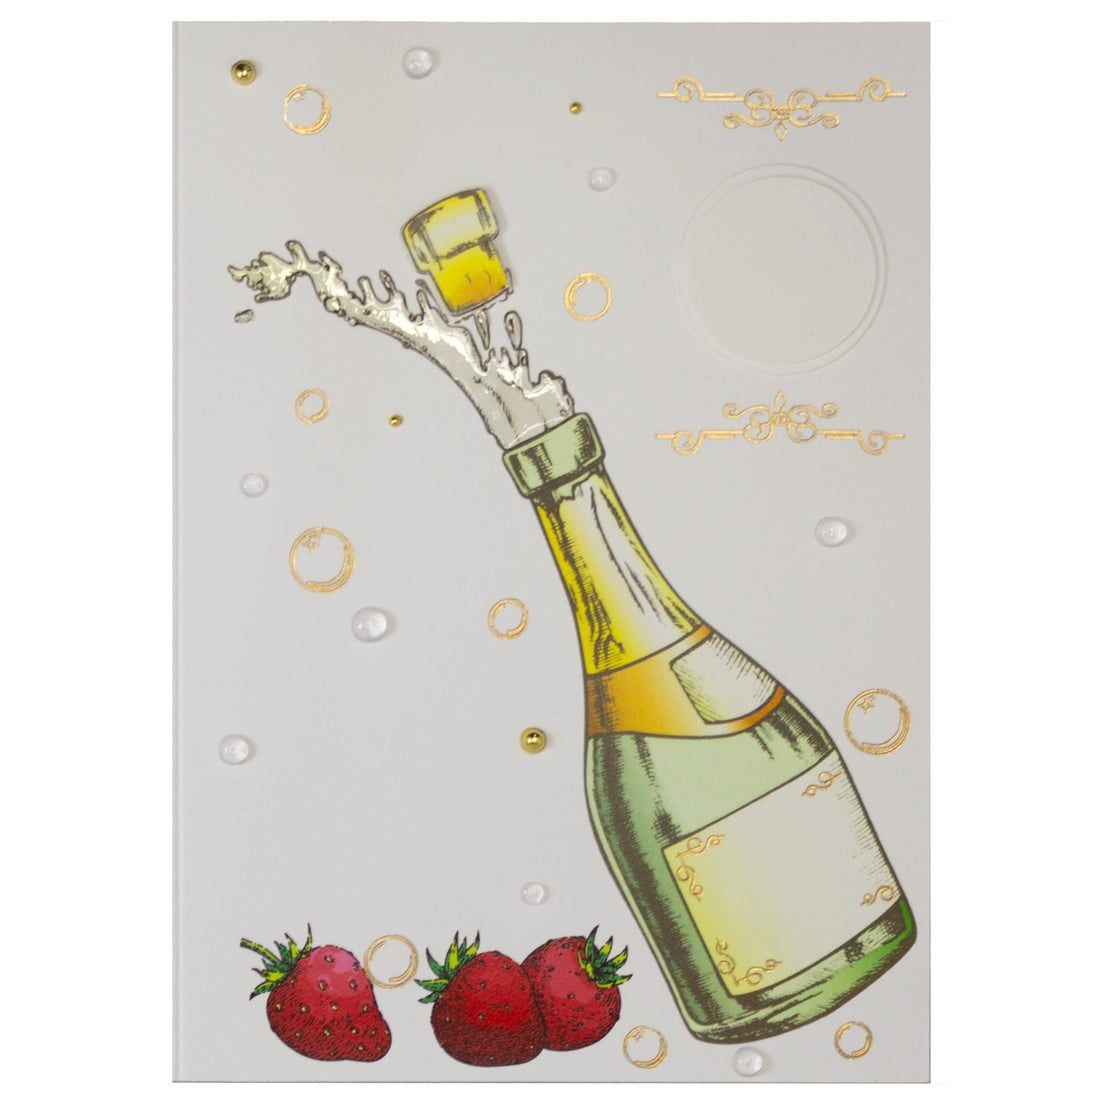 Sparkling Strawberry Celebration Greeting Card for Anniversary, Birthday, Congratulations, Graduation, New Job